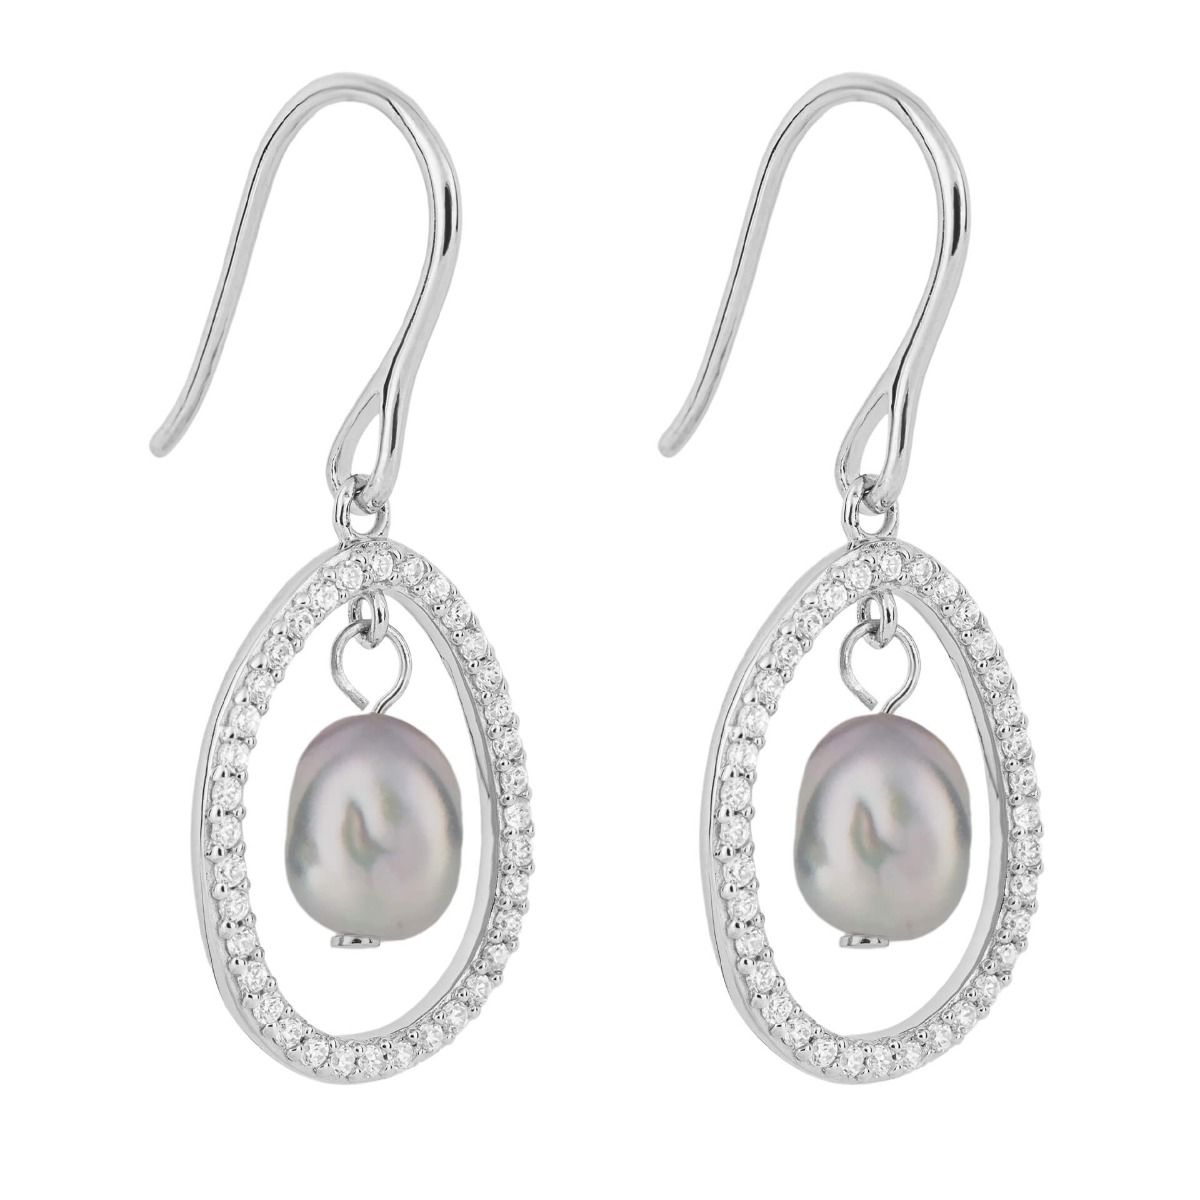 Fiorelli silver, keshi pearl and cubic zirconia oval drop earrings